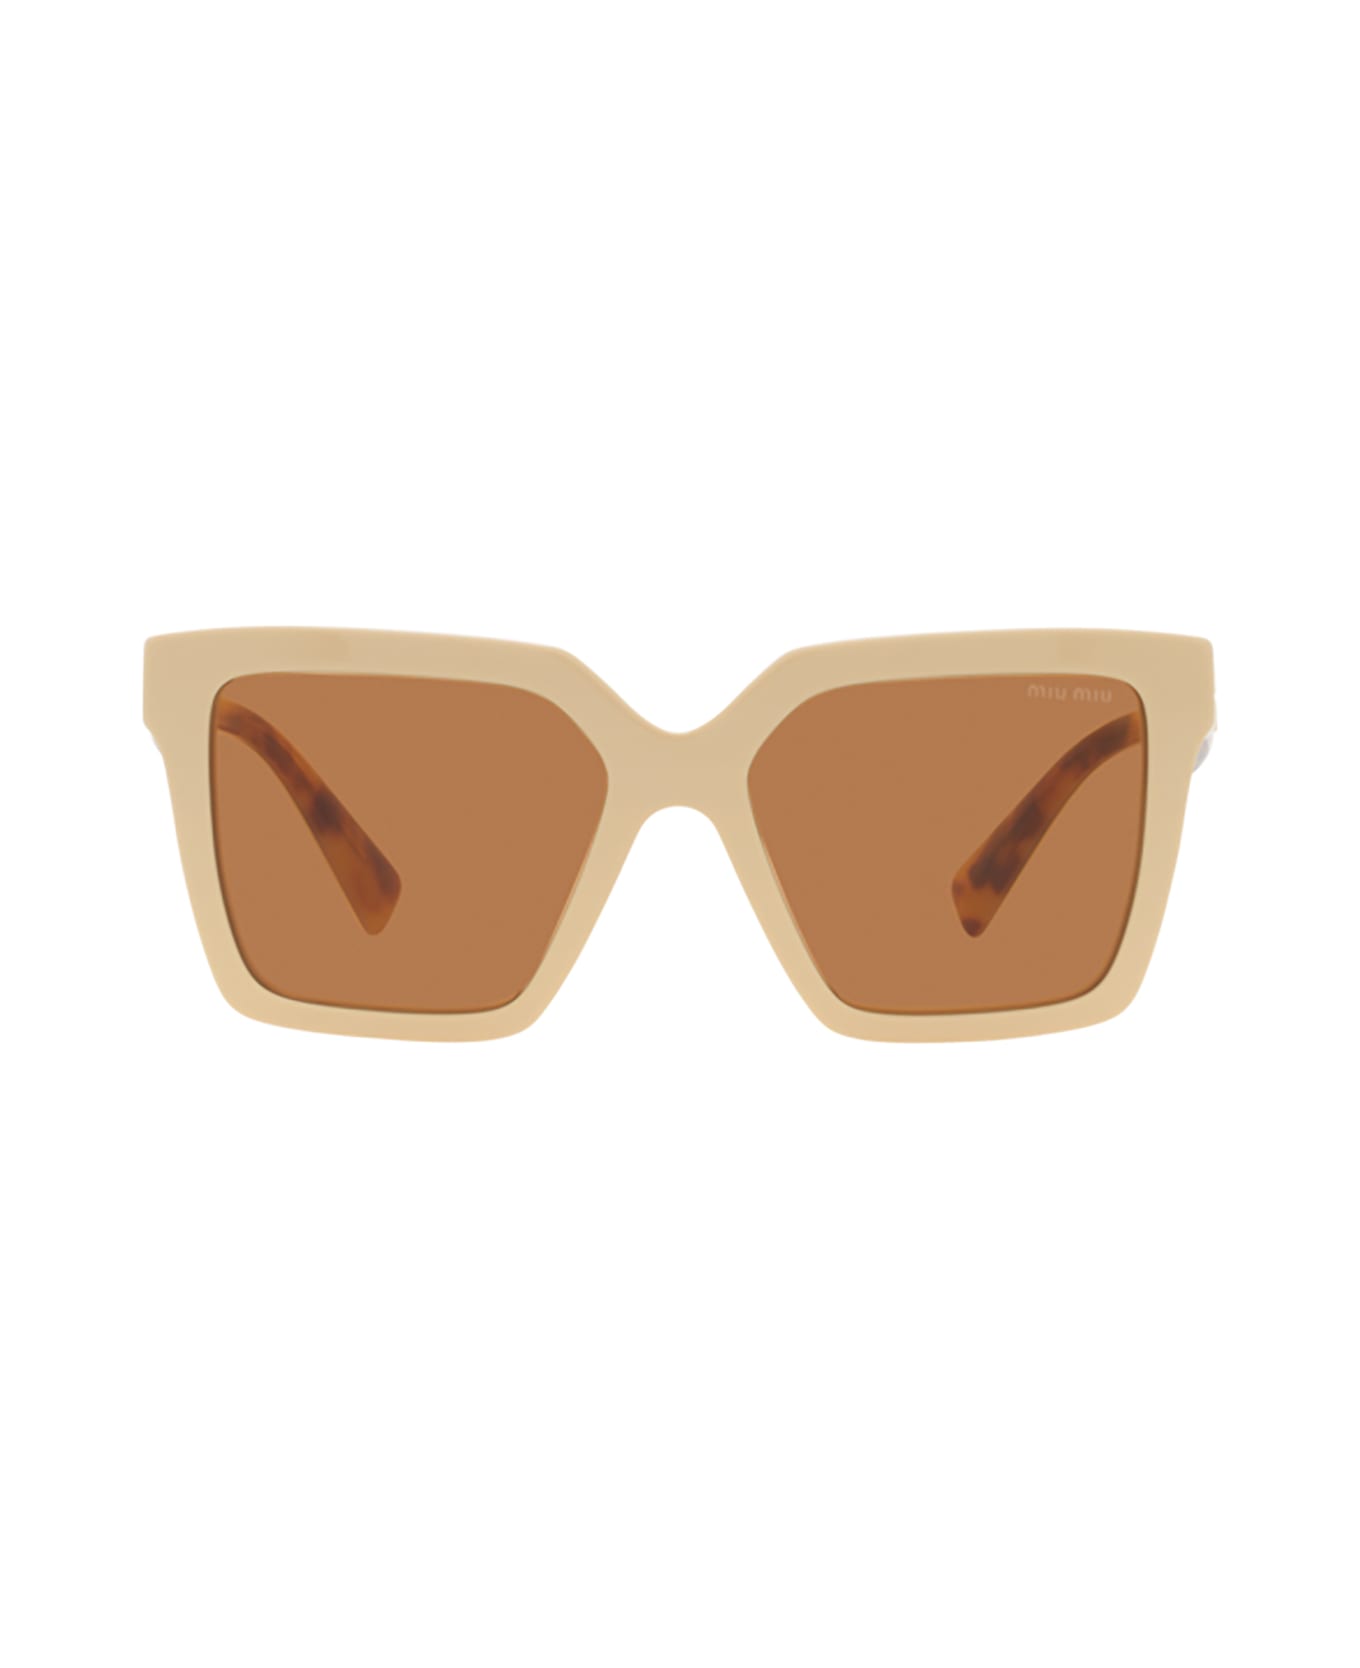 Miu Miu Eyewear Mu 03ys Beige (beige) Sunglasses - Beige (Beige)